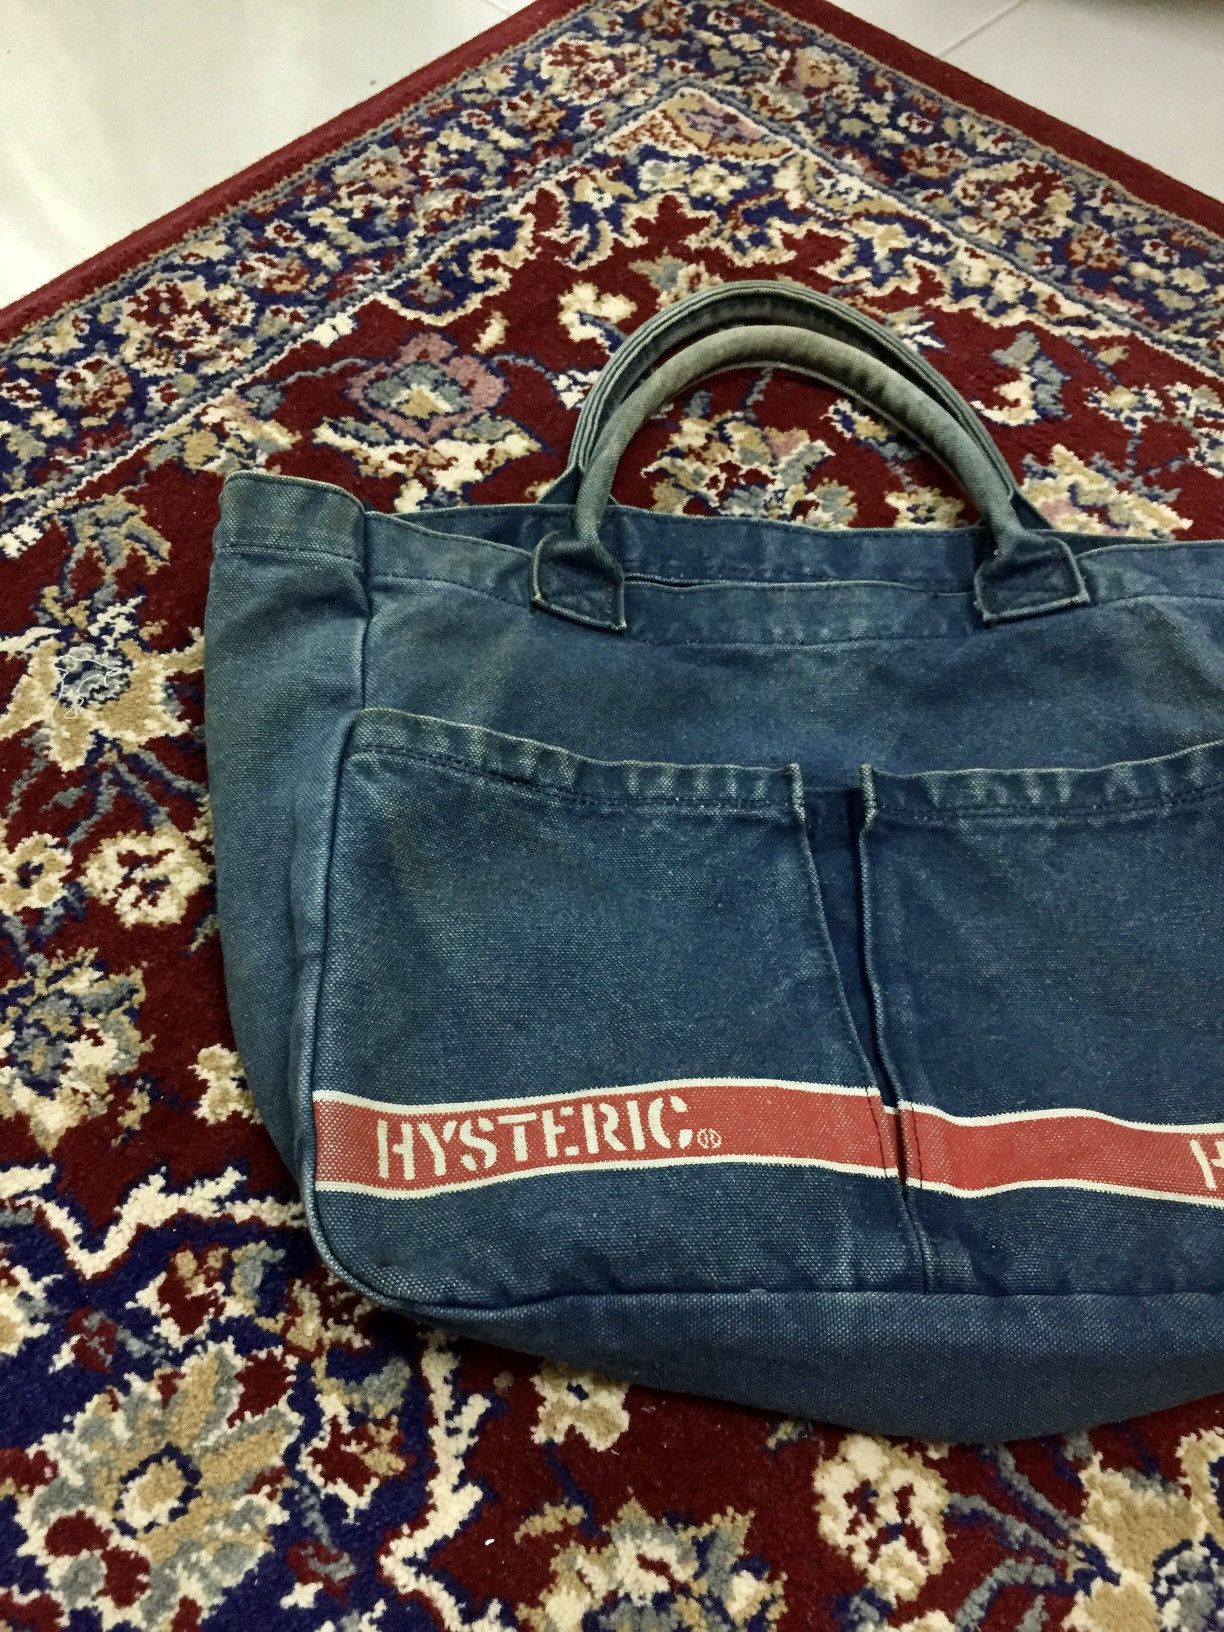 Hysteric Glamour Denim Tote Bag - 4